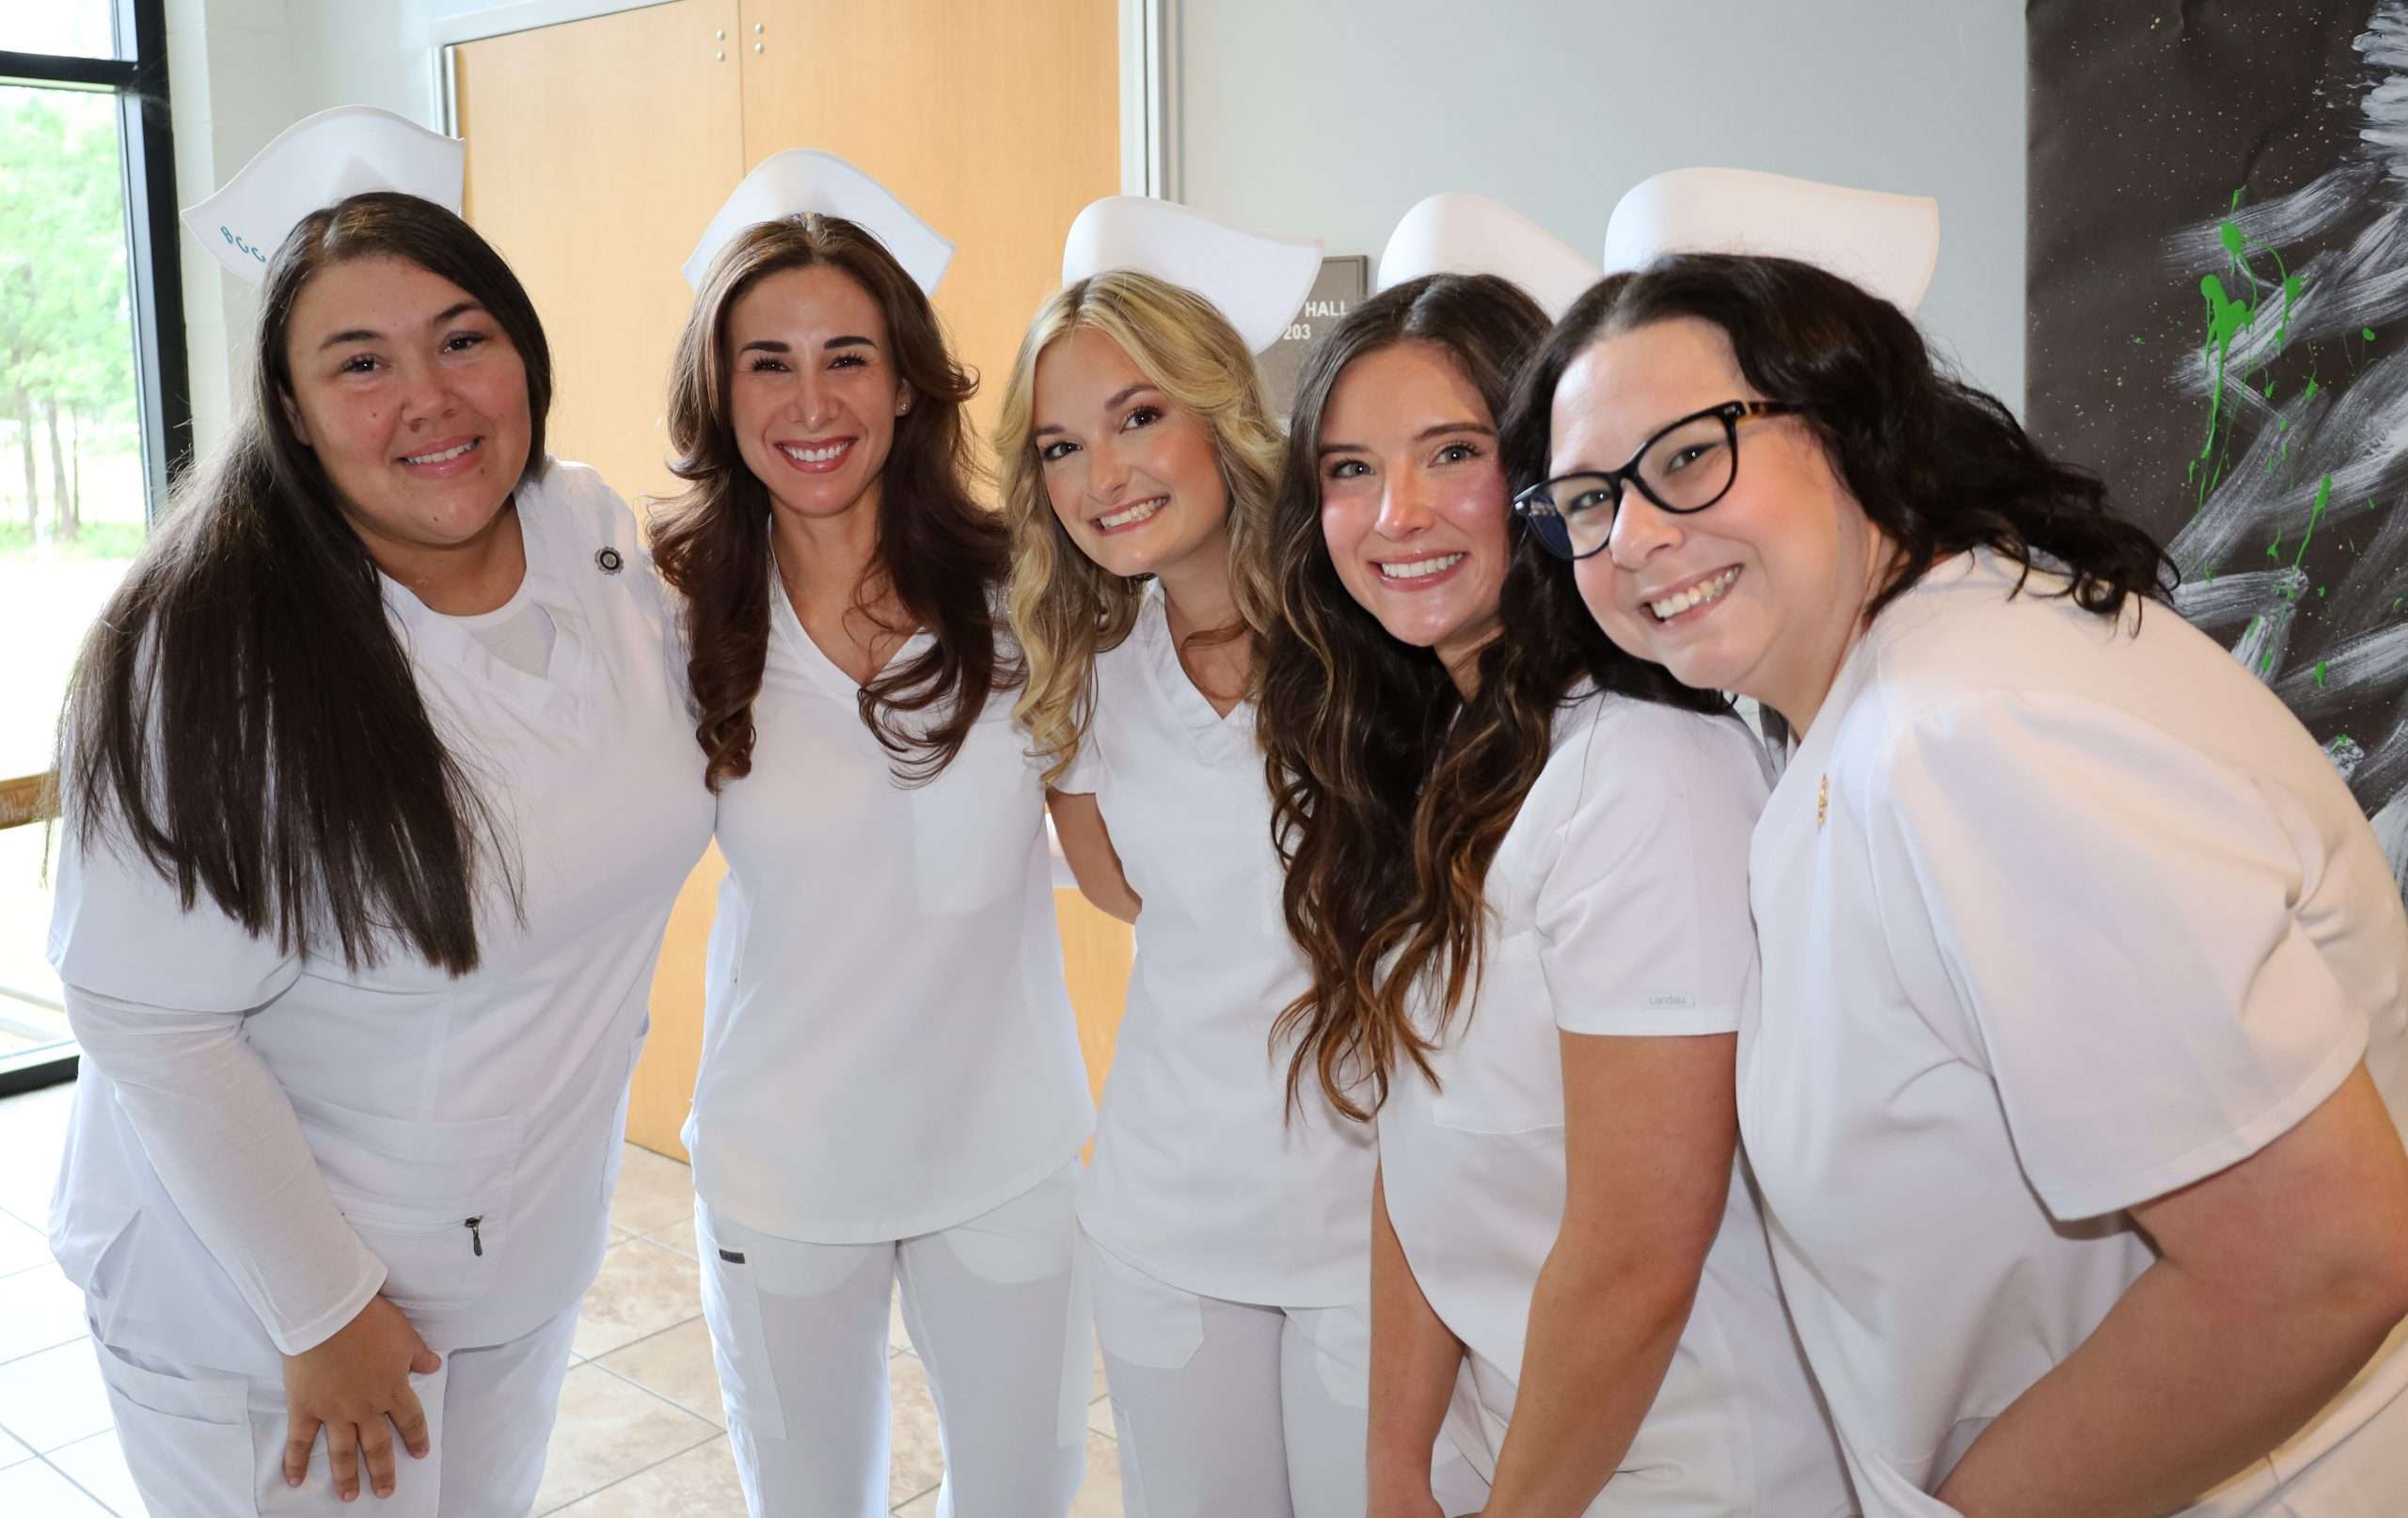 Five nursing graduates smiling in a group shot